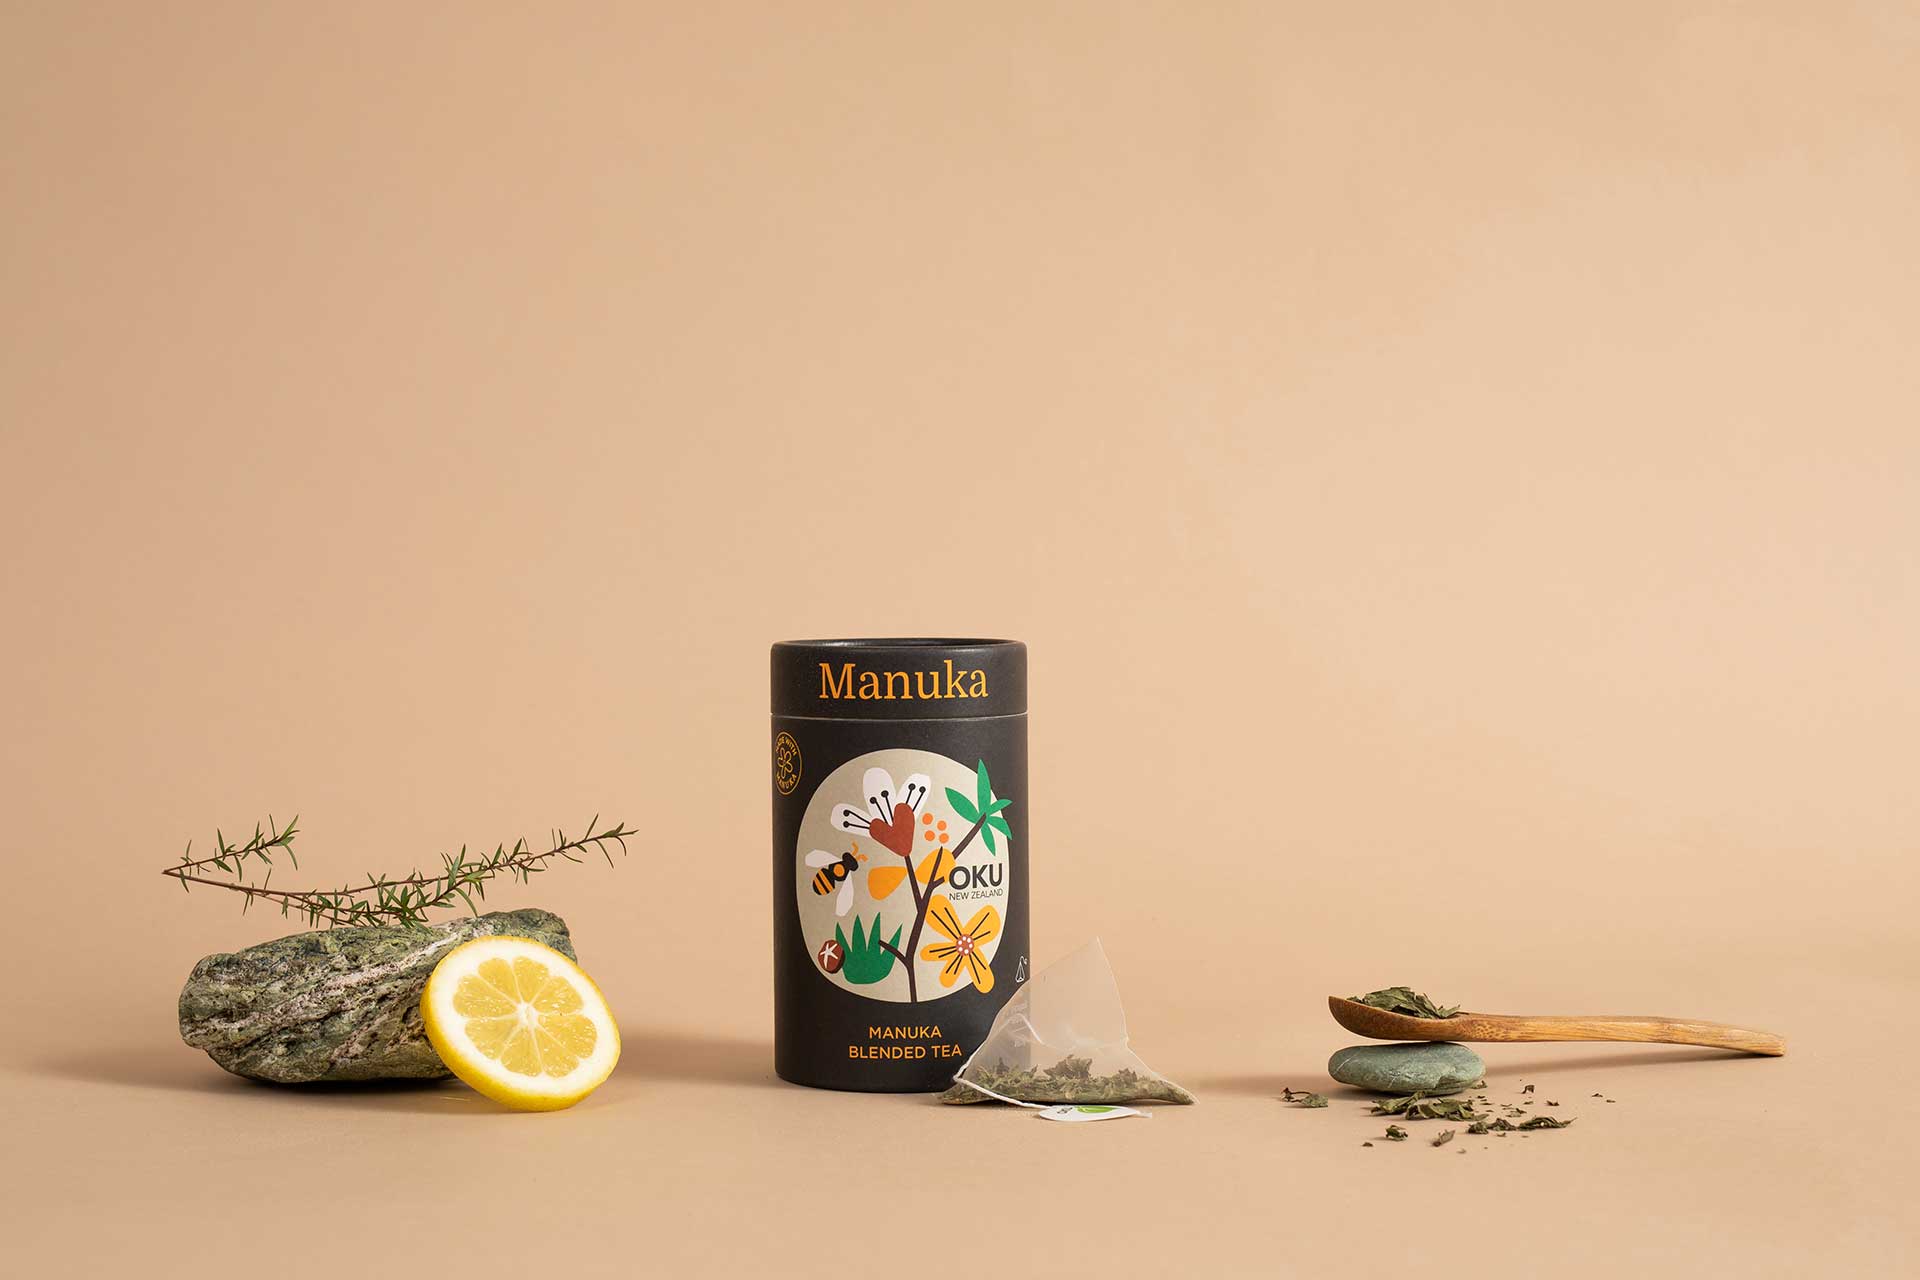 Manuka tea packaging